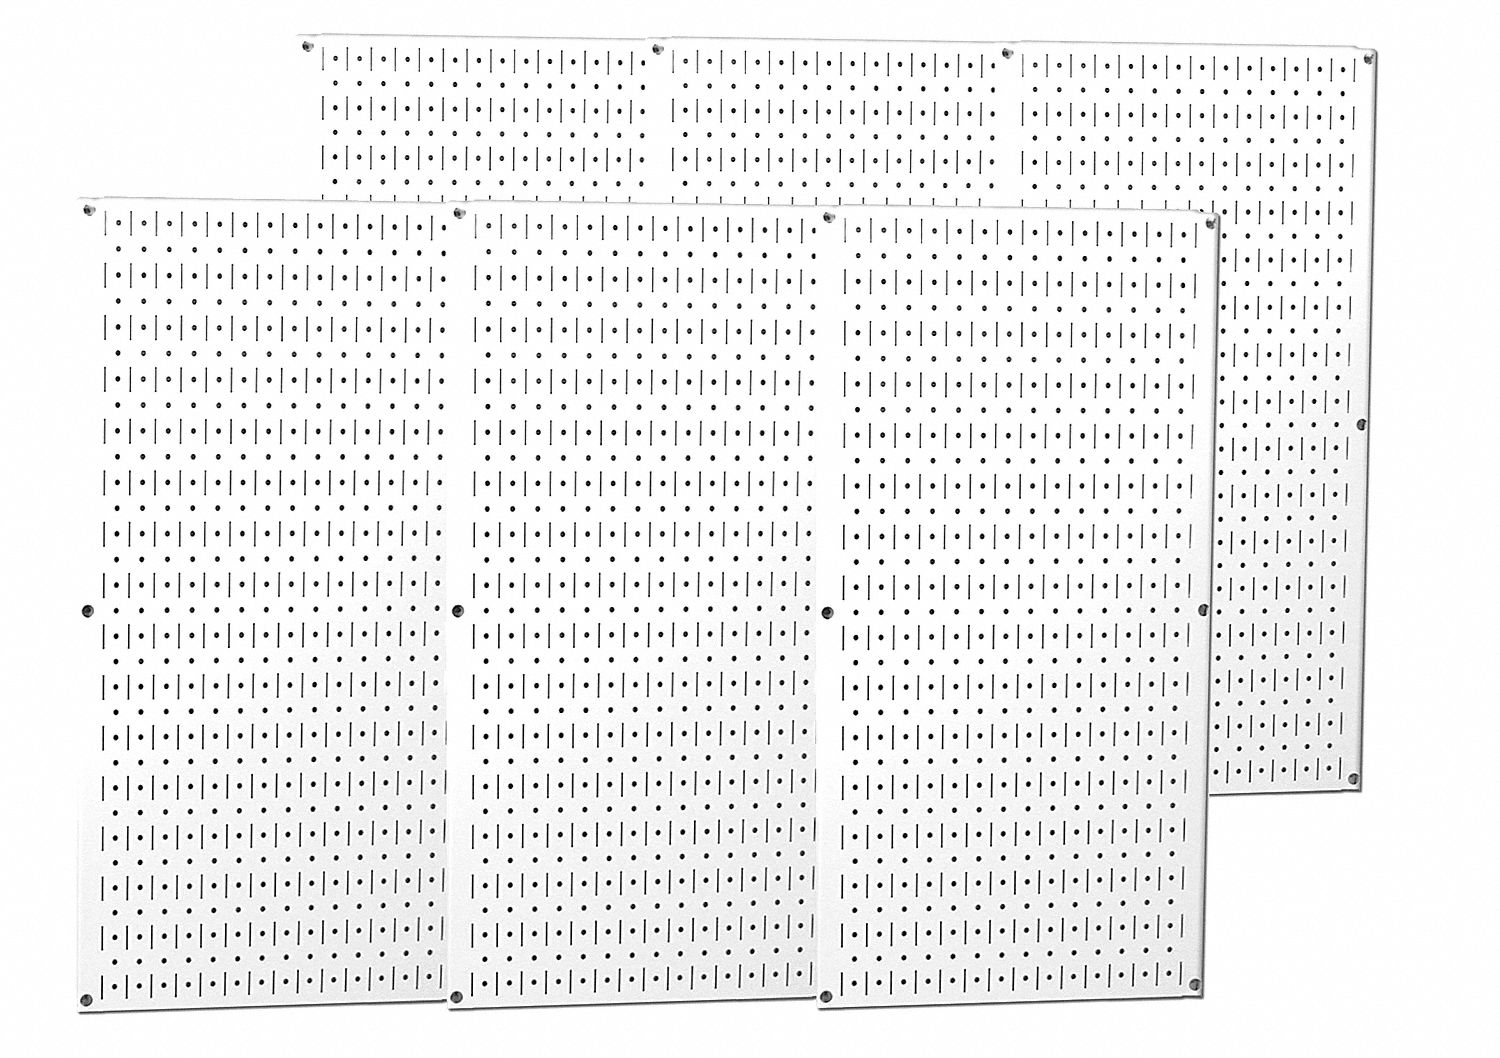 Pegboard Panel: 1 in Slots, 1/4 in Rd Hole, 32 in x 96 in x 3/4 in, Steel, White